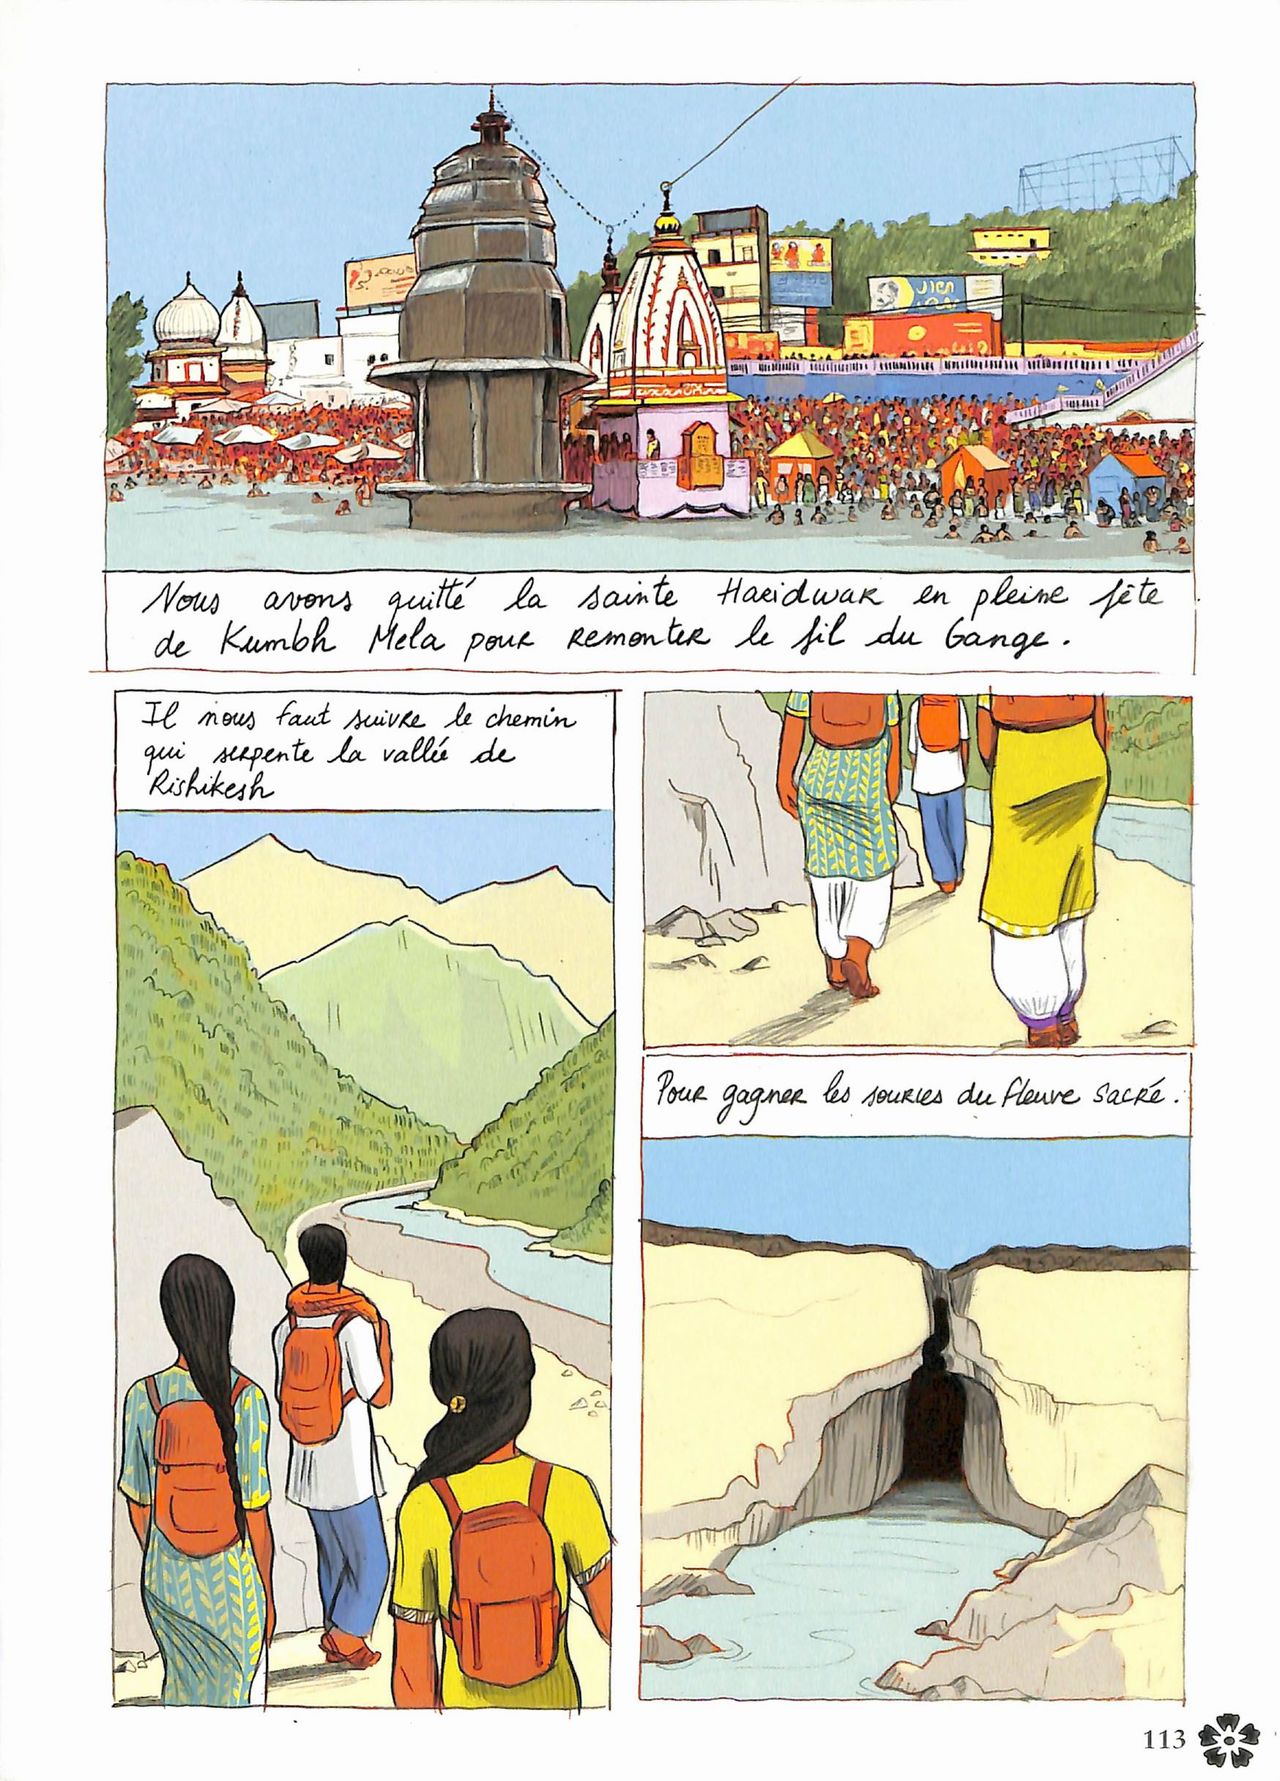 Kama Sutra en bandes dessinées - Kama Sutra with Comics numero d'image 113